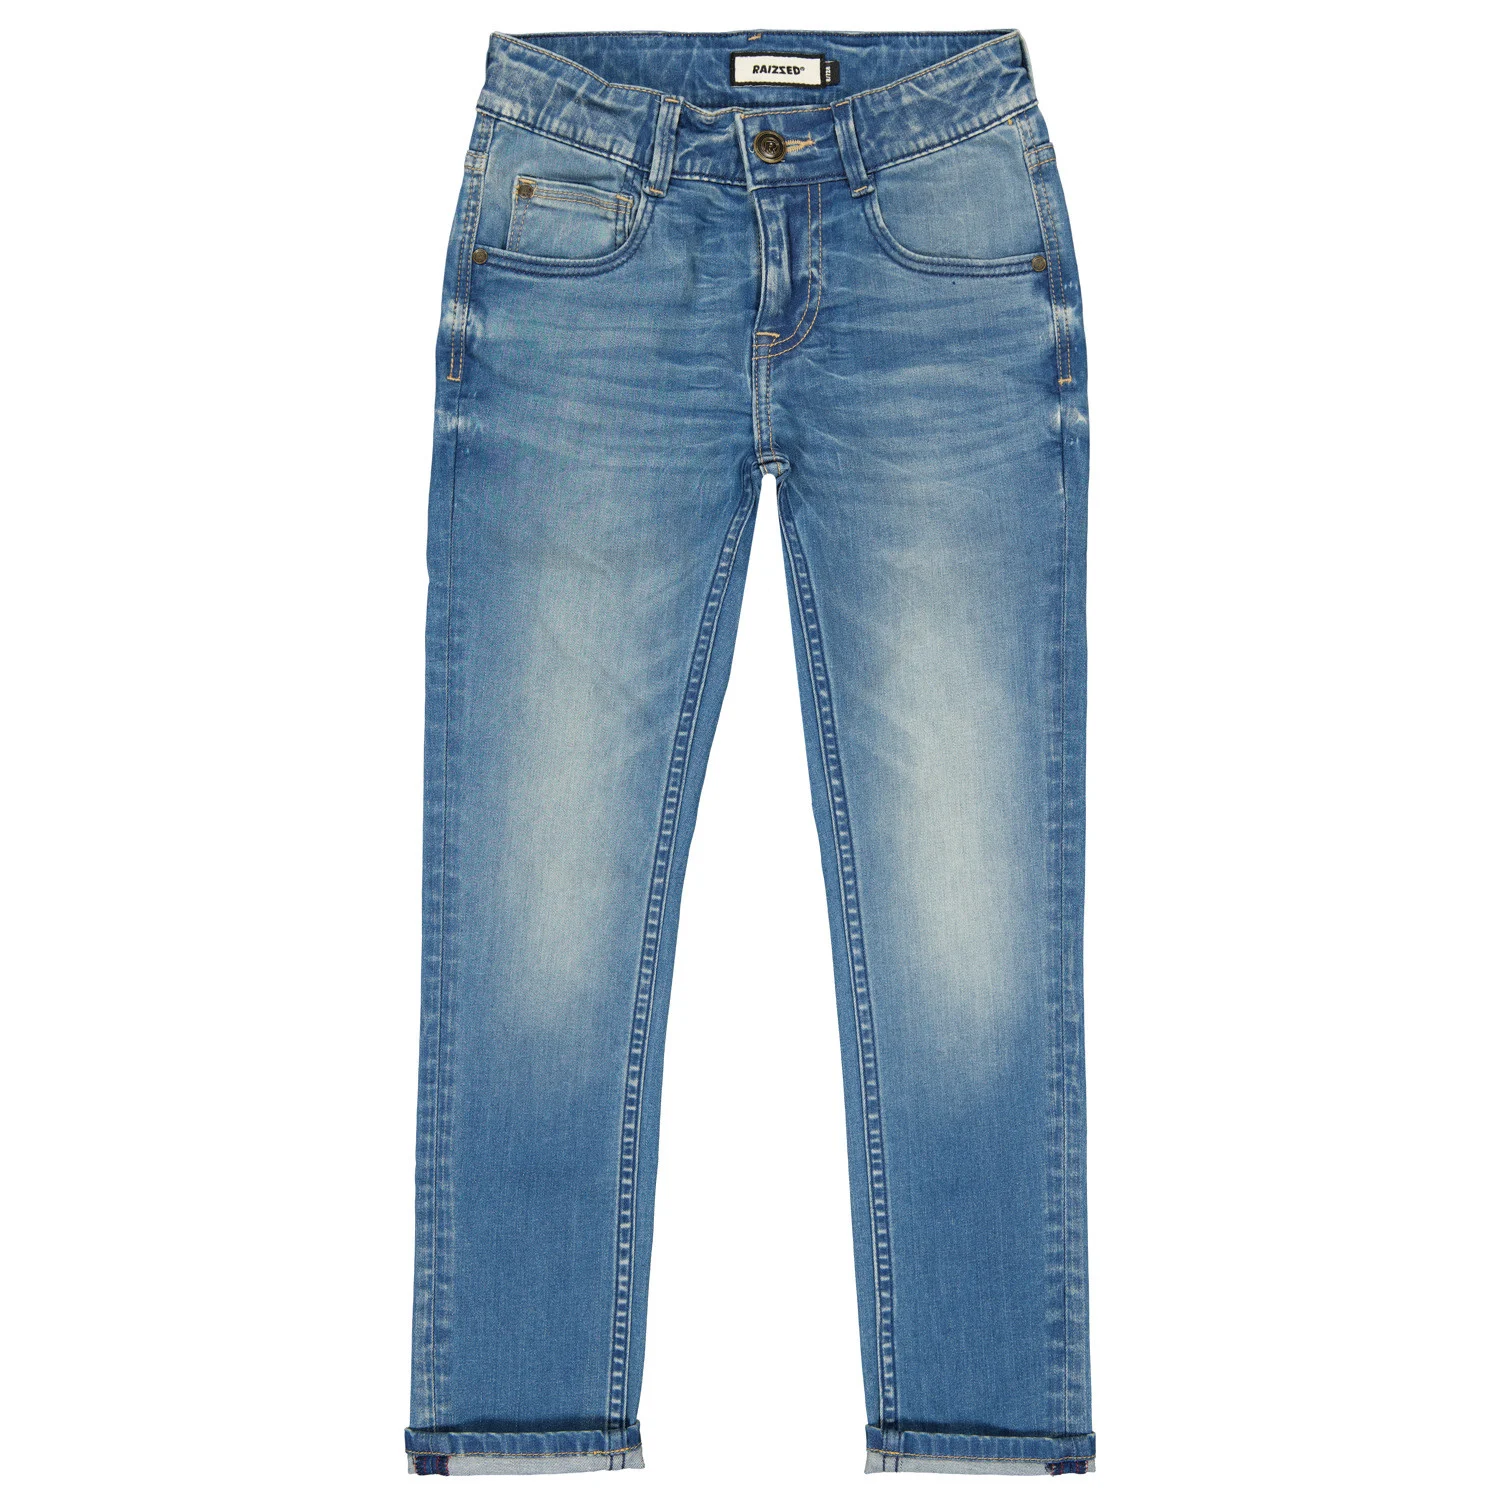 Afbeelding van Raizzed Jongens jeans nora tokyo skinny fit mid blue stone